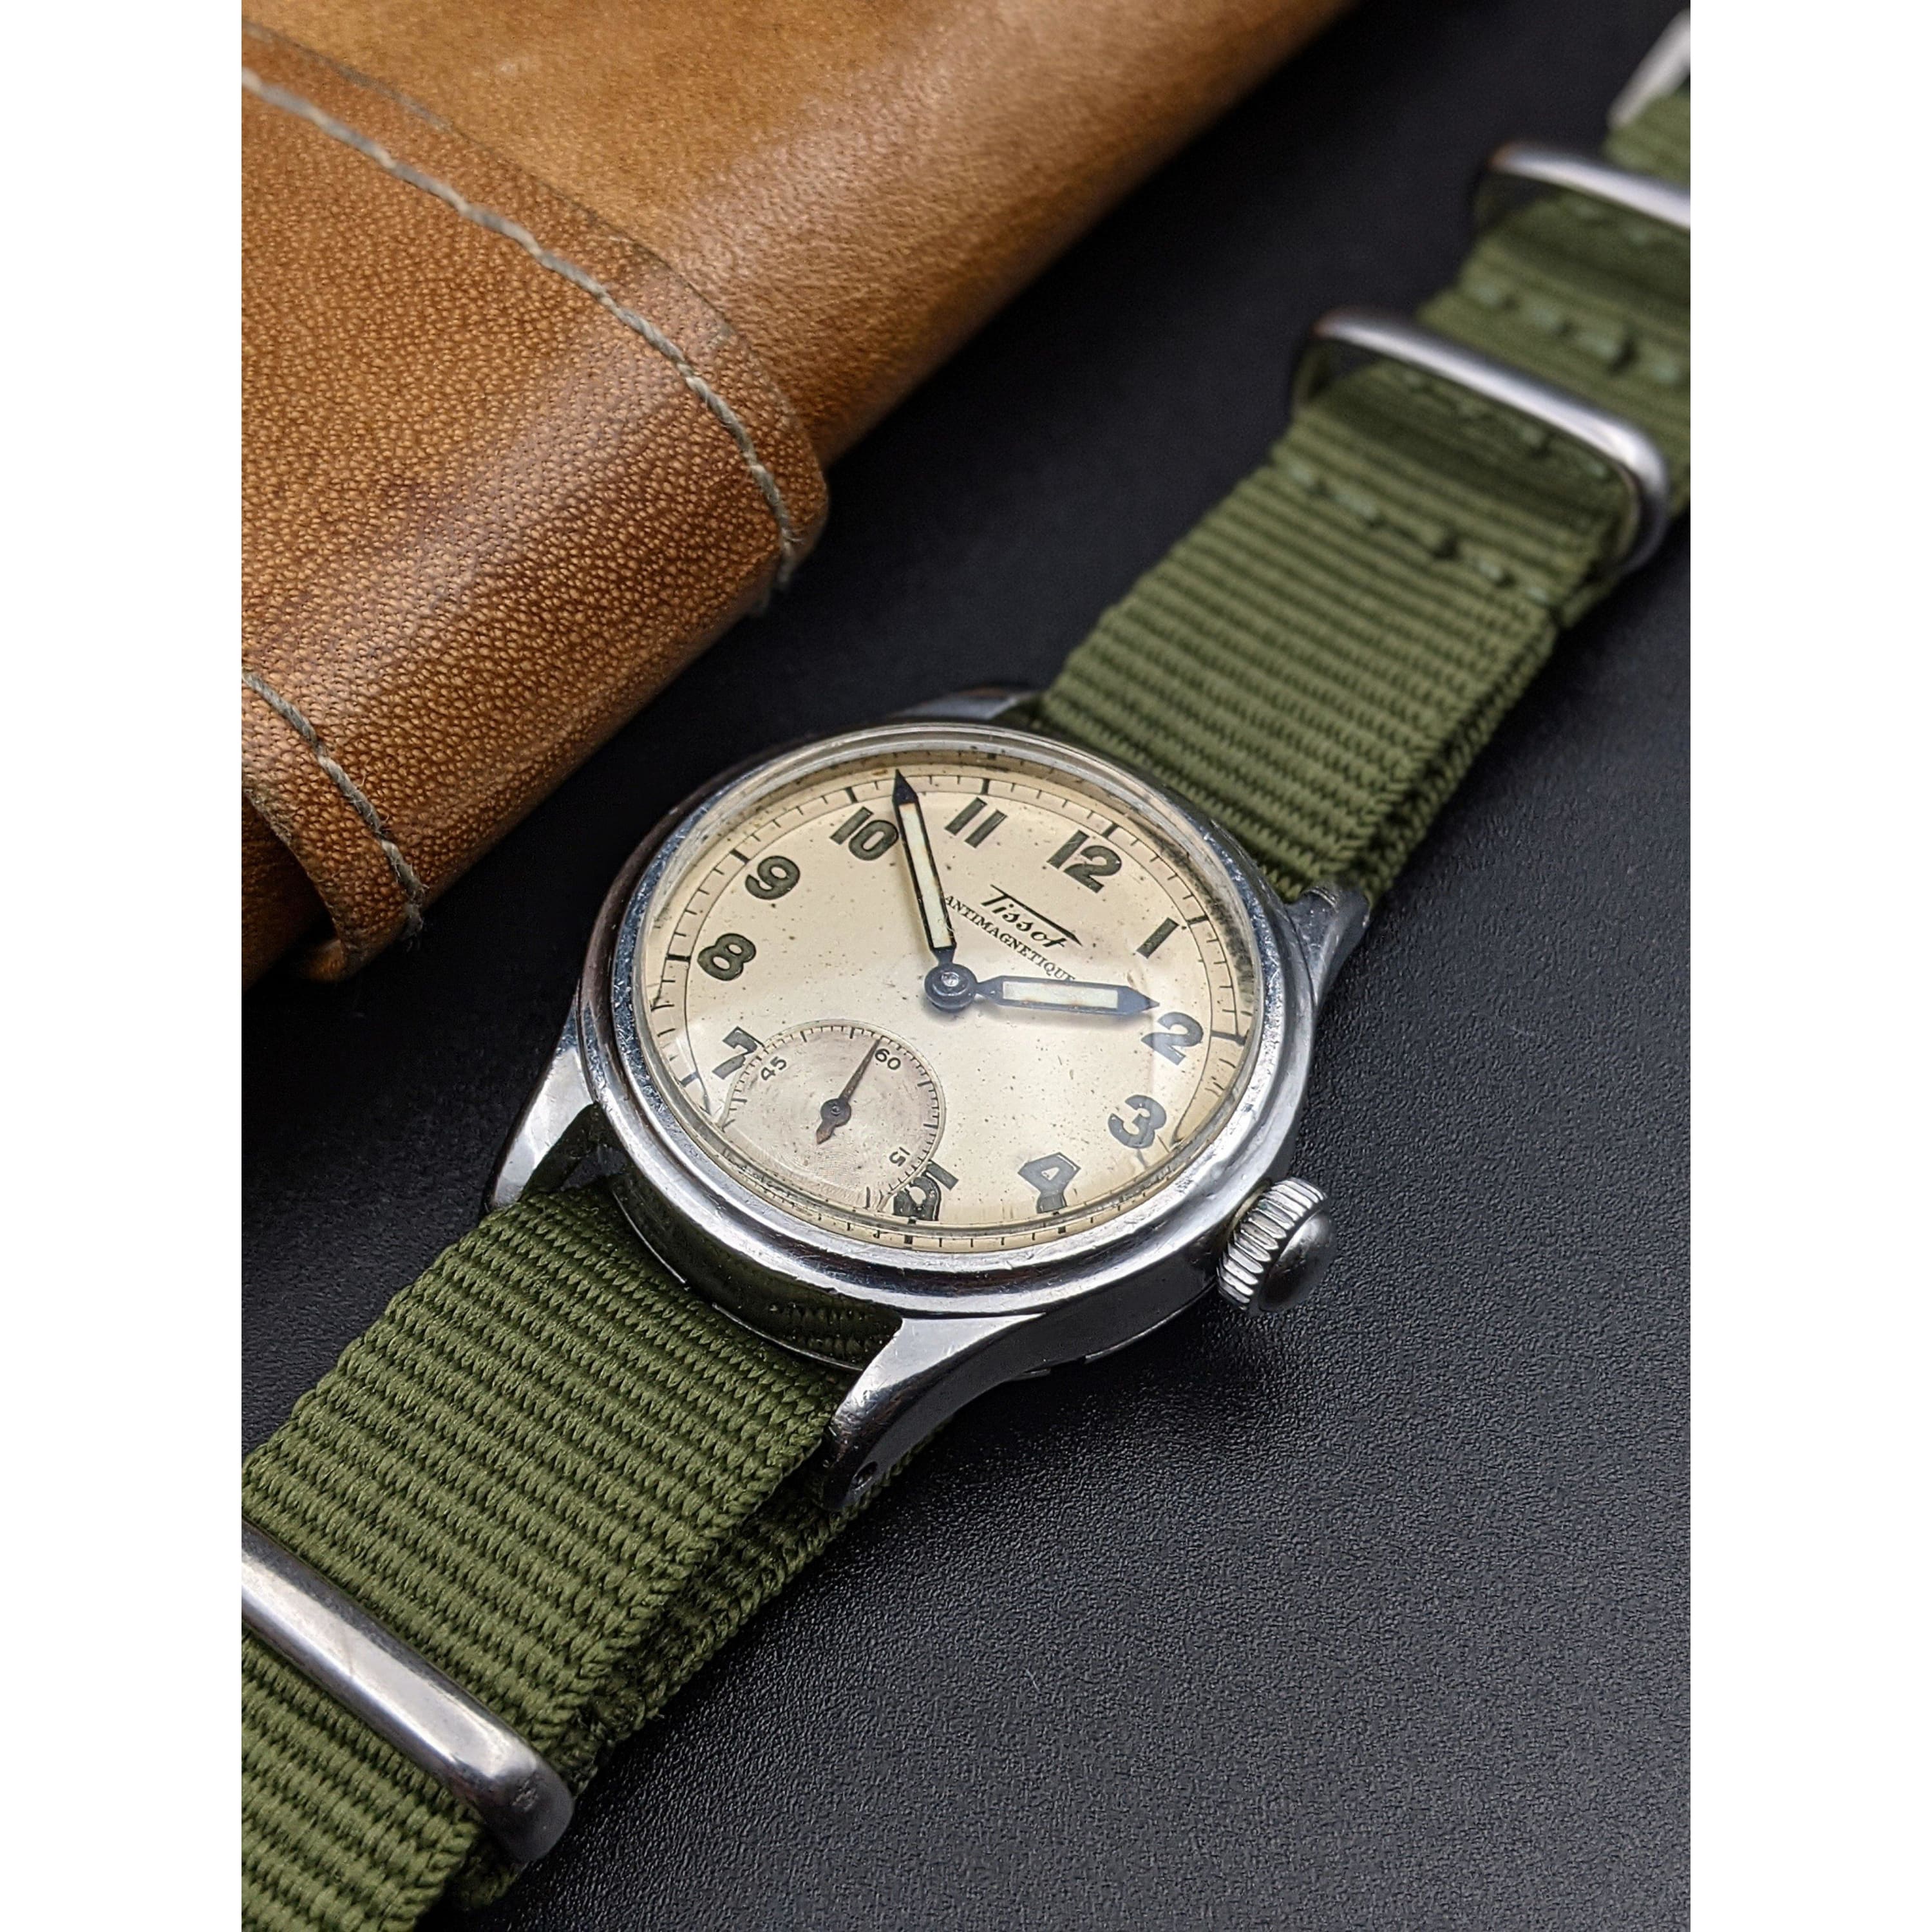 Rare Military Omega Watch - Swiss Premium Watch from 1940s – VintageDuMarko